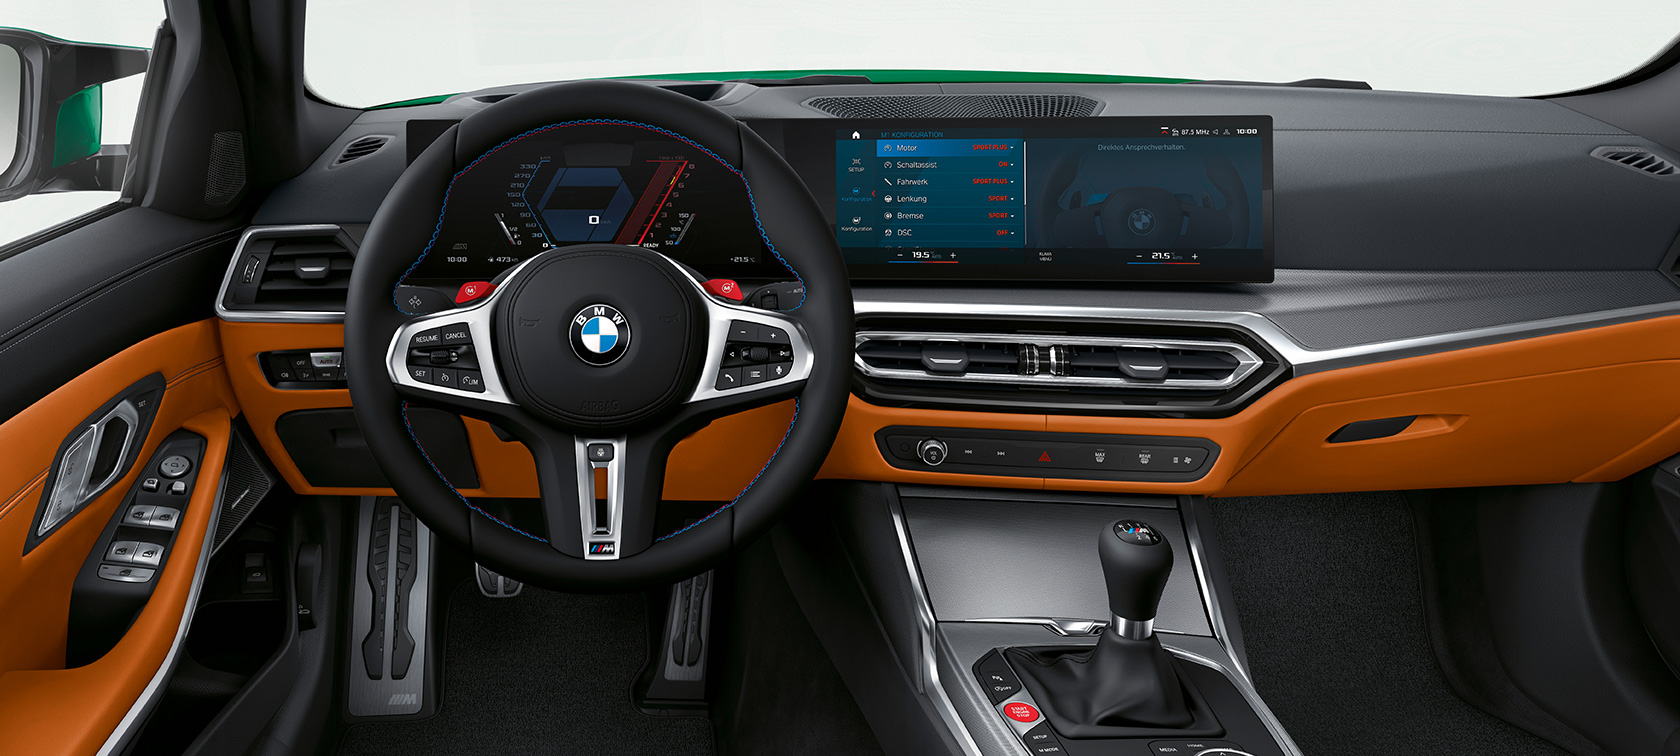 BMW M3 Sedan G80 2020 cockpit interior 